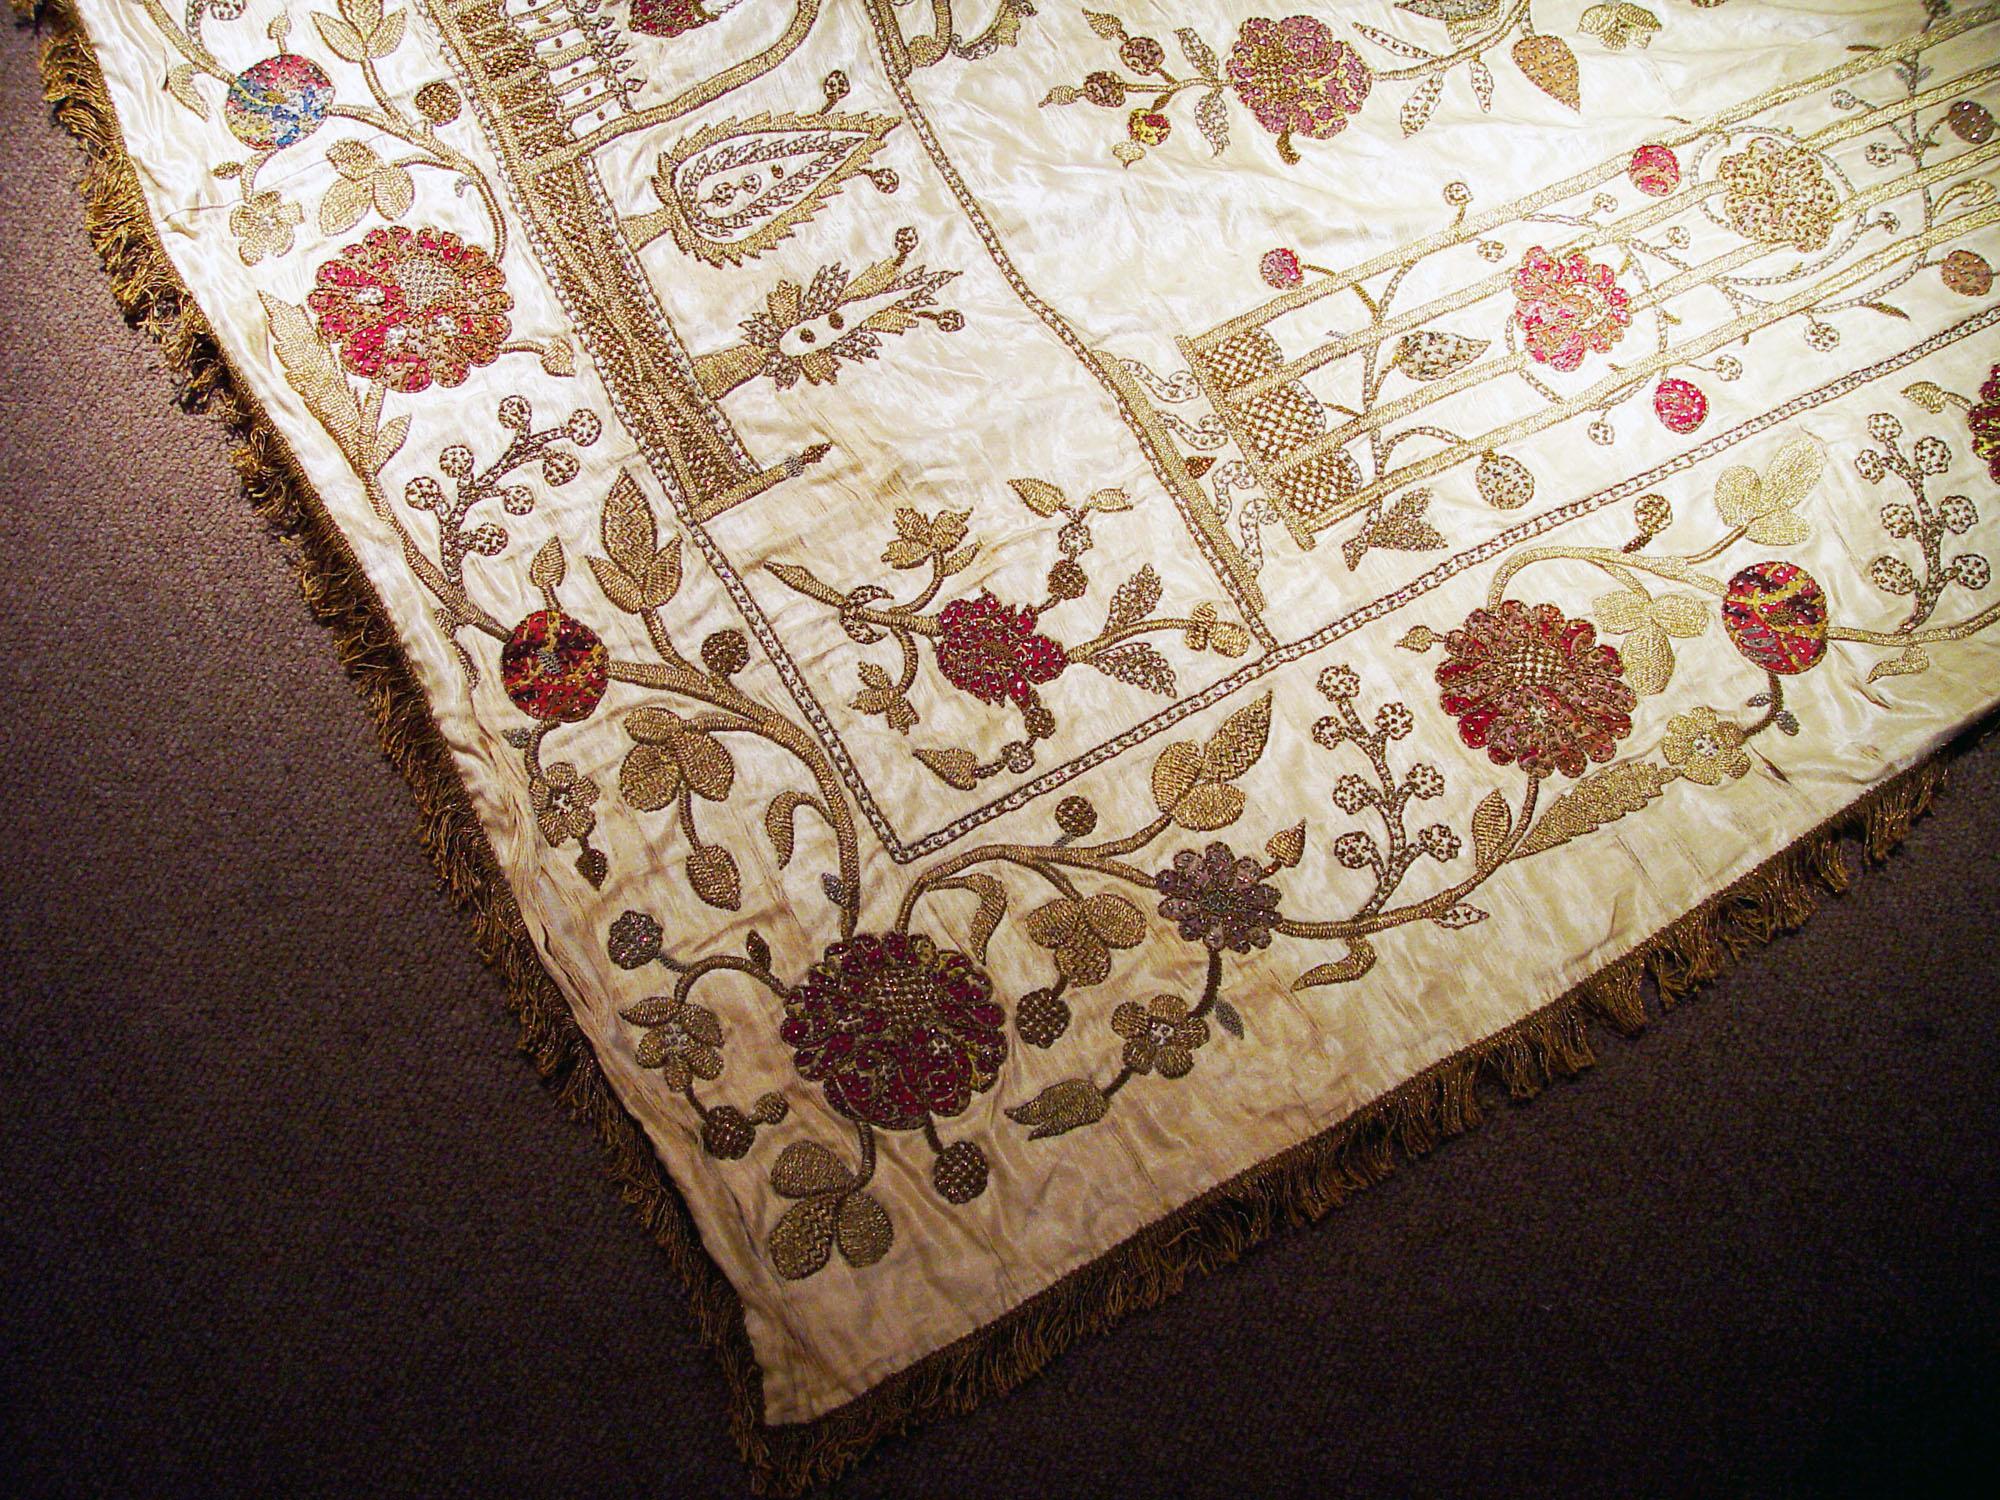 Ottoman Large Silkwork Textile Botanical Embroidery Hanging For Sale 8